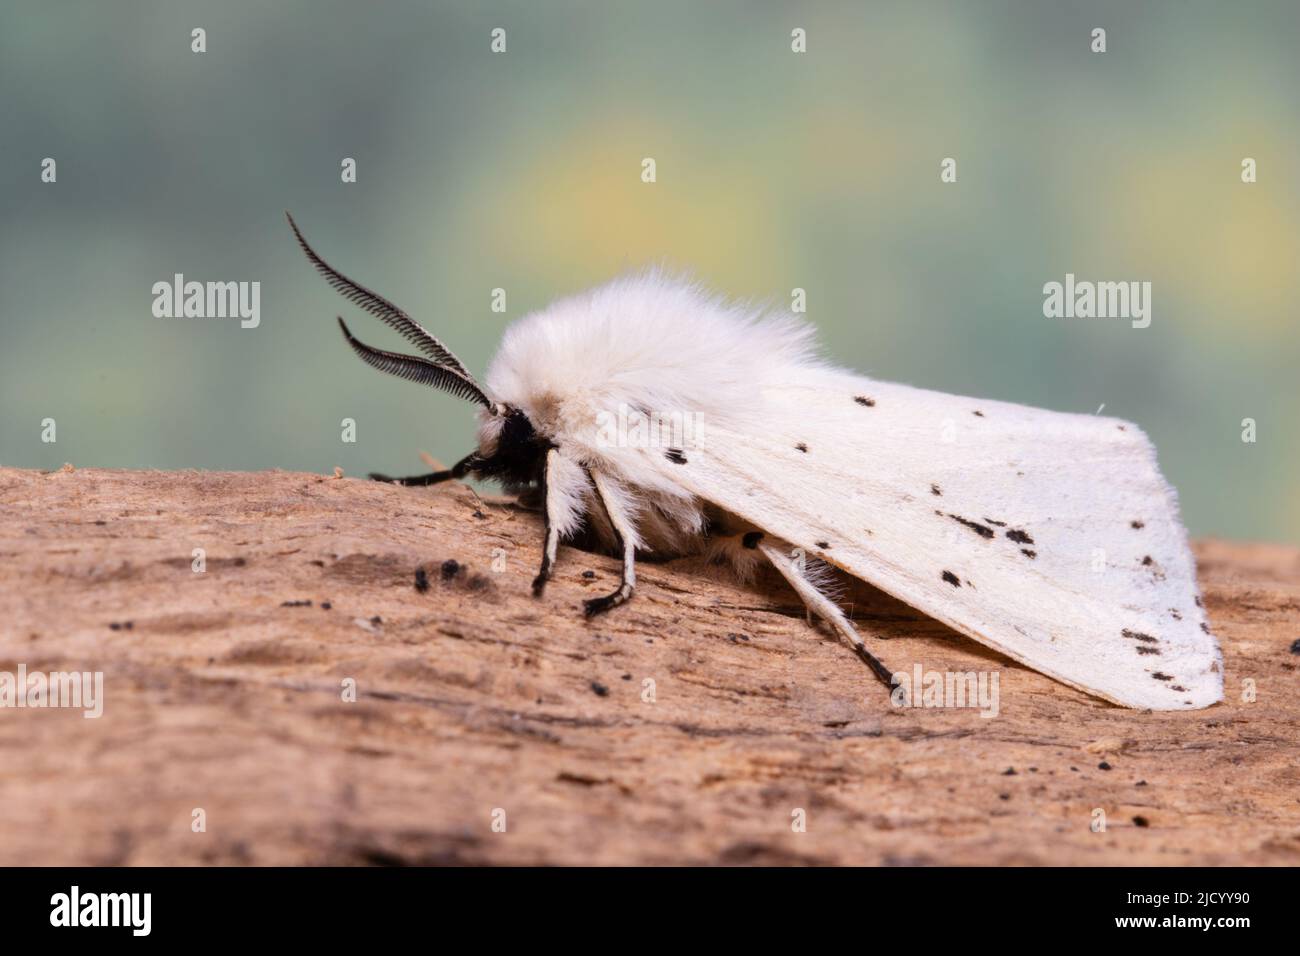 A white ermine moth, Spilosoma lubricipeda, resting on a rotten log. Stock Photo